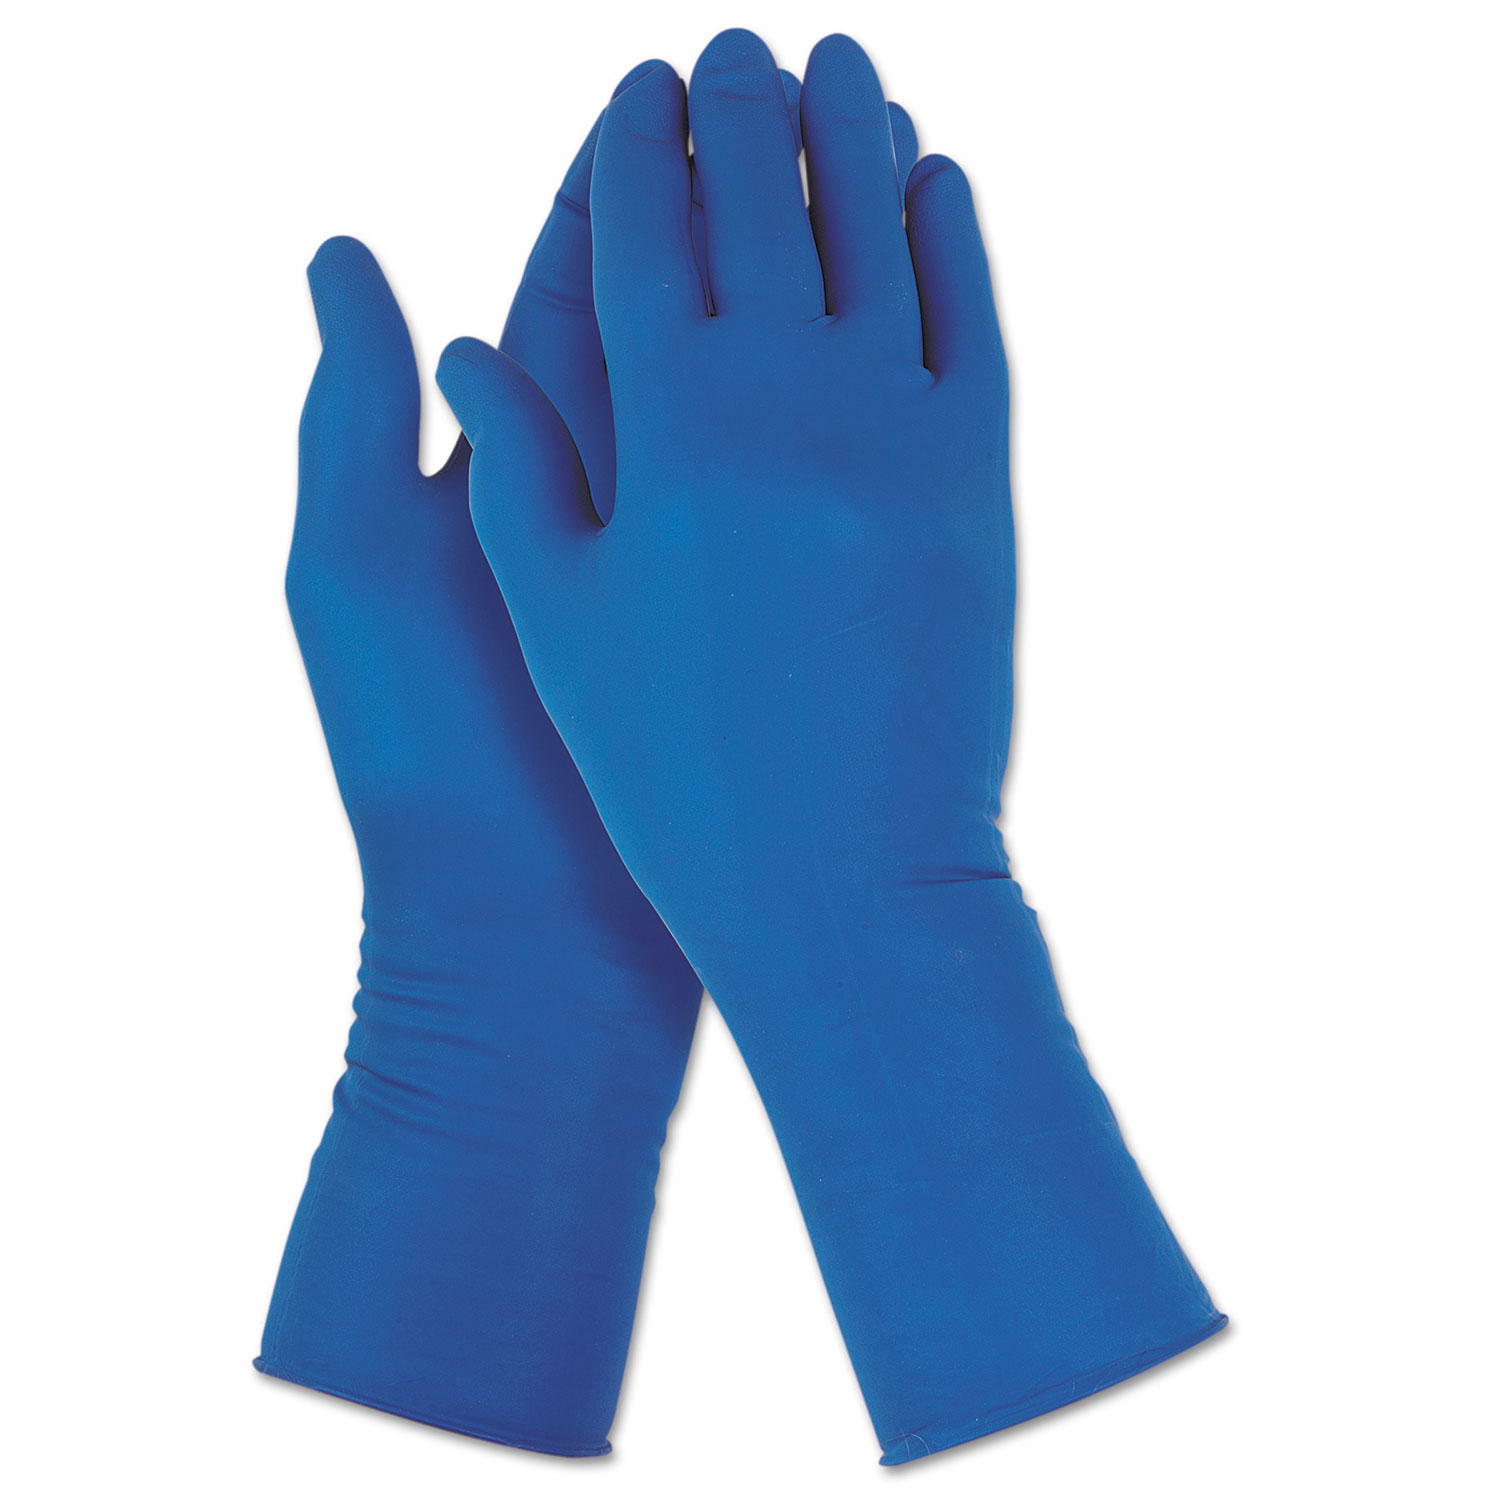  KleenGuard 49824 G29 Solvent Resistant Gloves, 295 mm Length, Medium/Size 8, Blue, 500/Carton (KCC49824) 